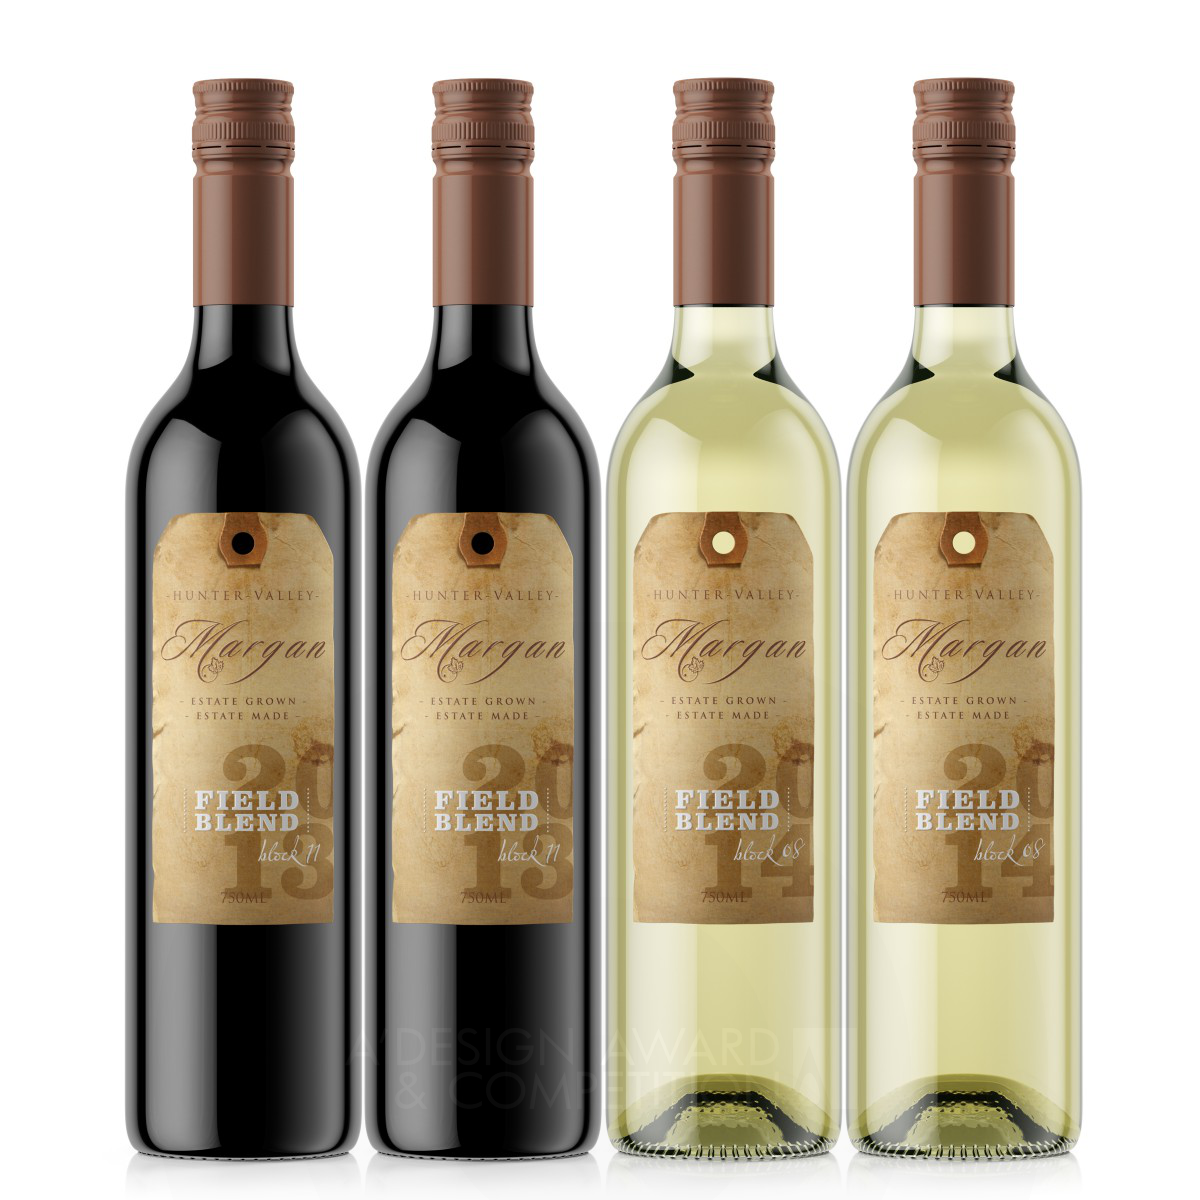 Margan-Field Blend Wine label by Angela Spindler Iron Packaging Design Award Winner 2015 